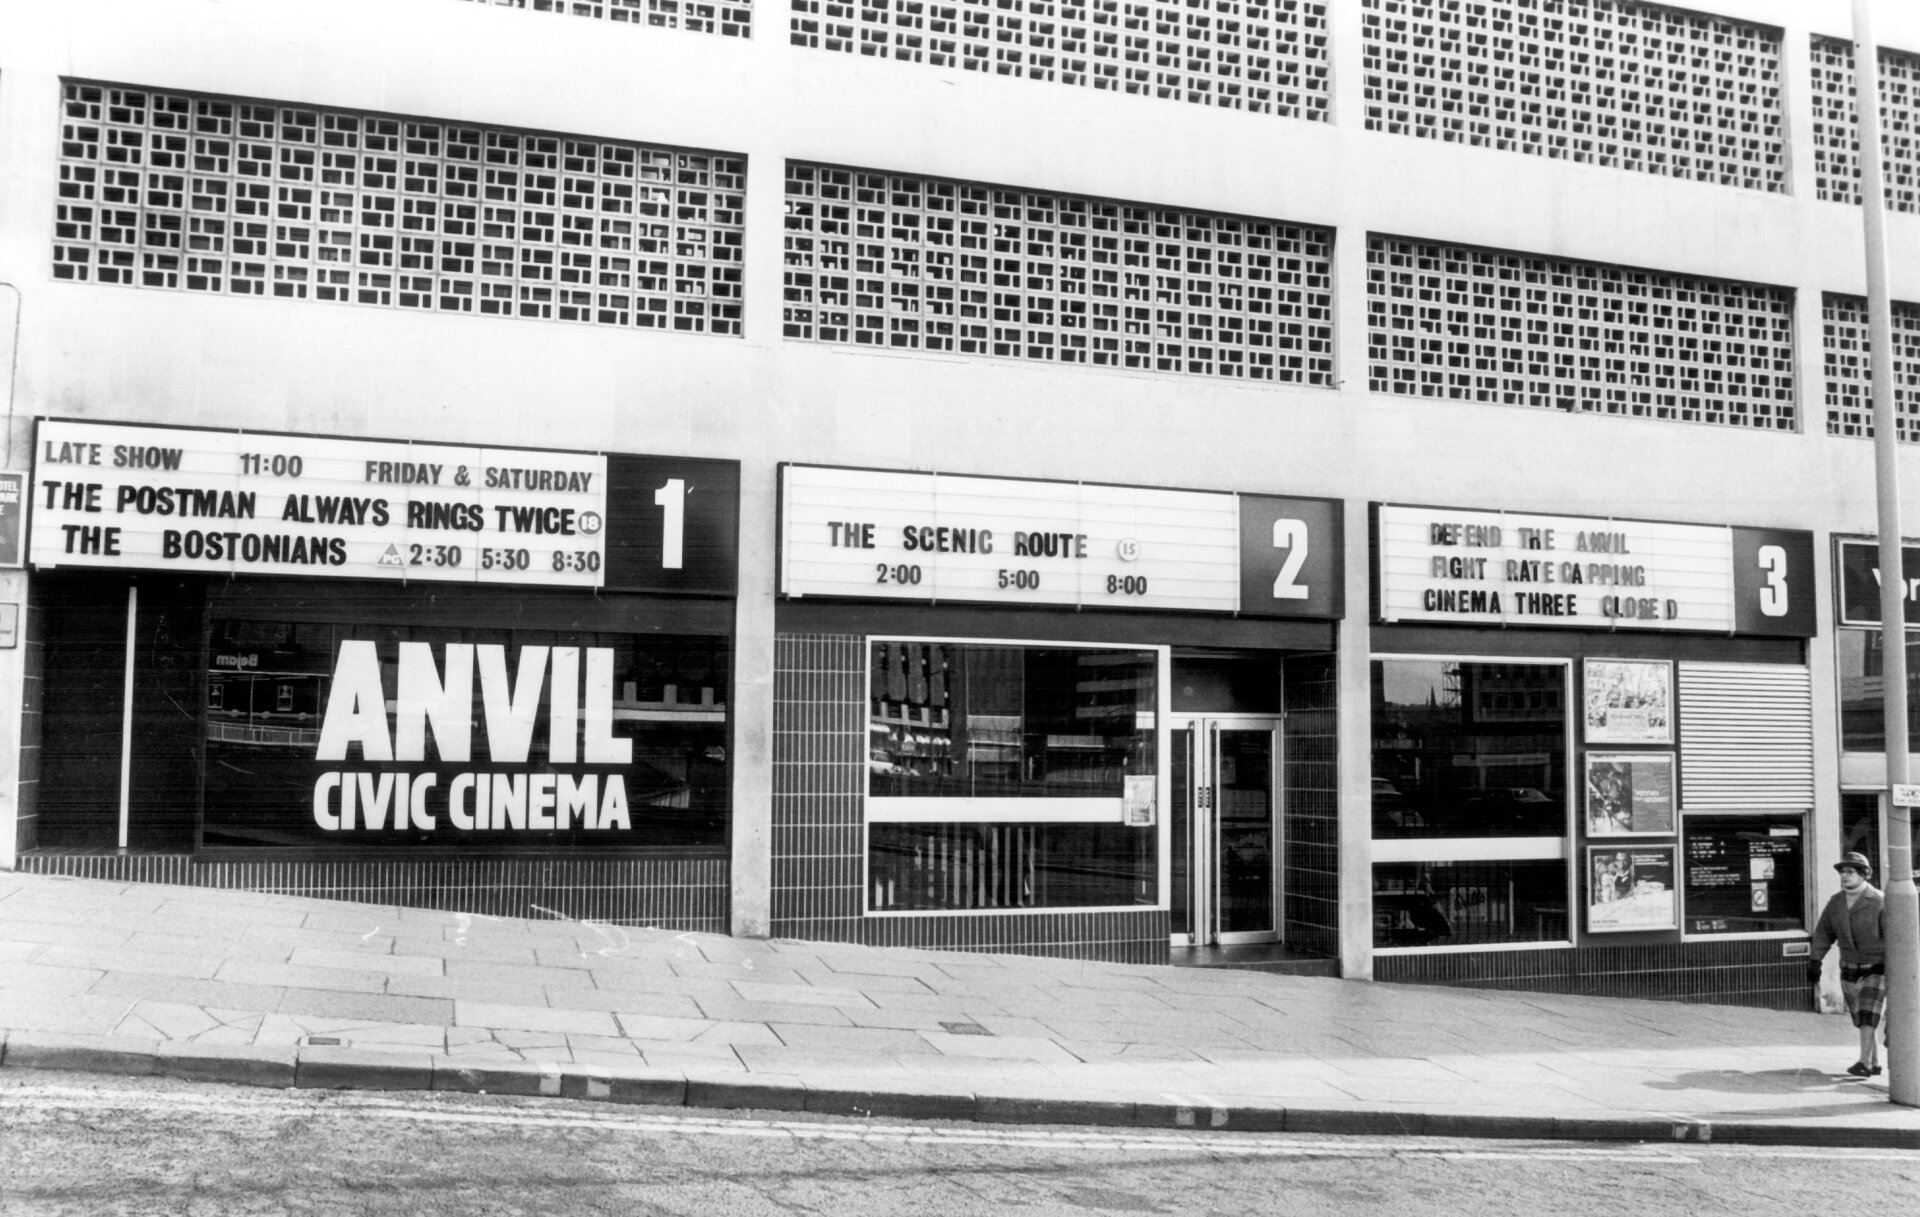 Anvil cinema frontage